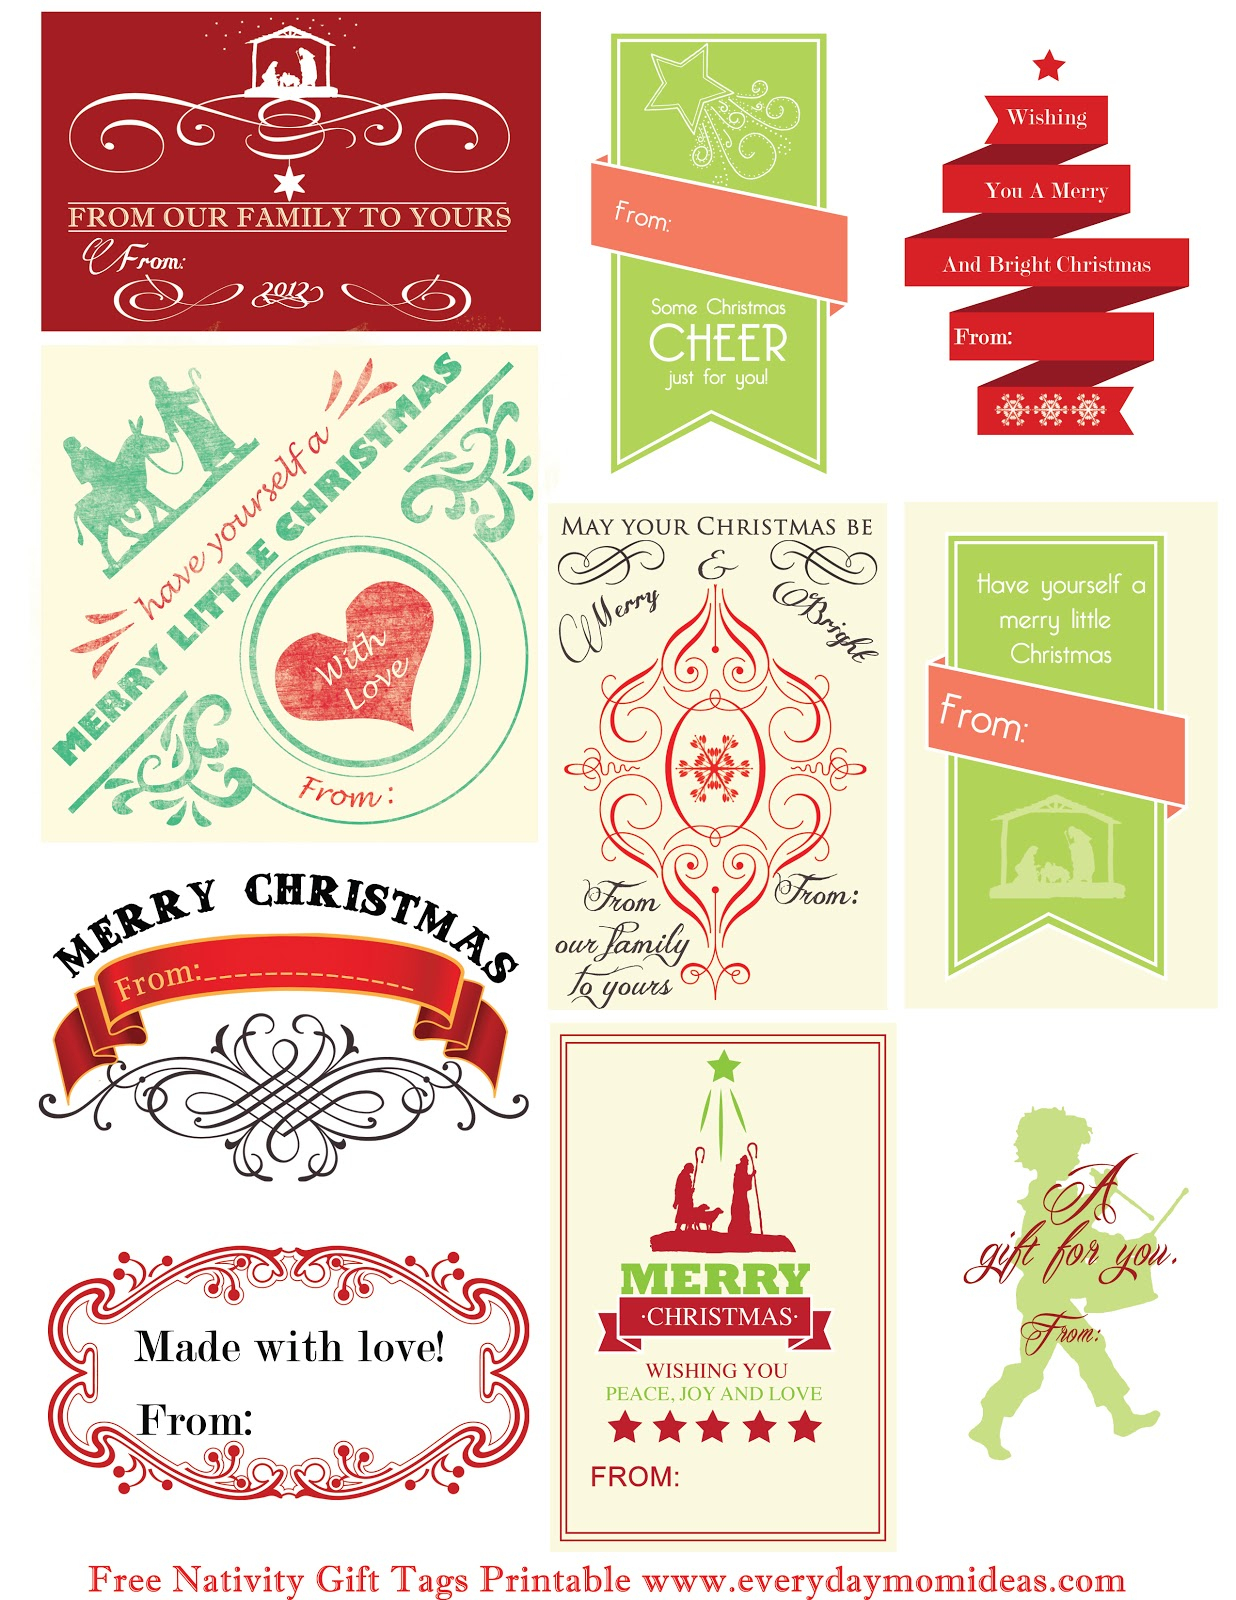 Free Nativity Gift Tags Printable - Everyday Mom Ideas - Free Printable Toe Tags